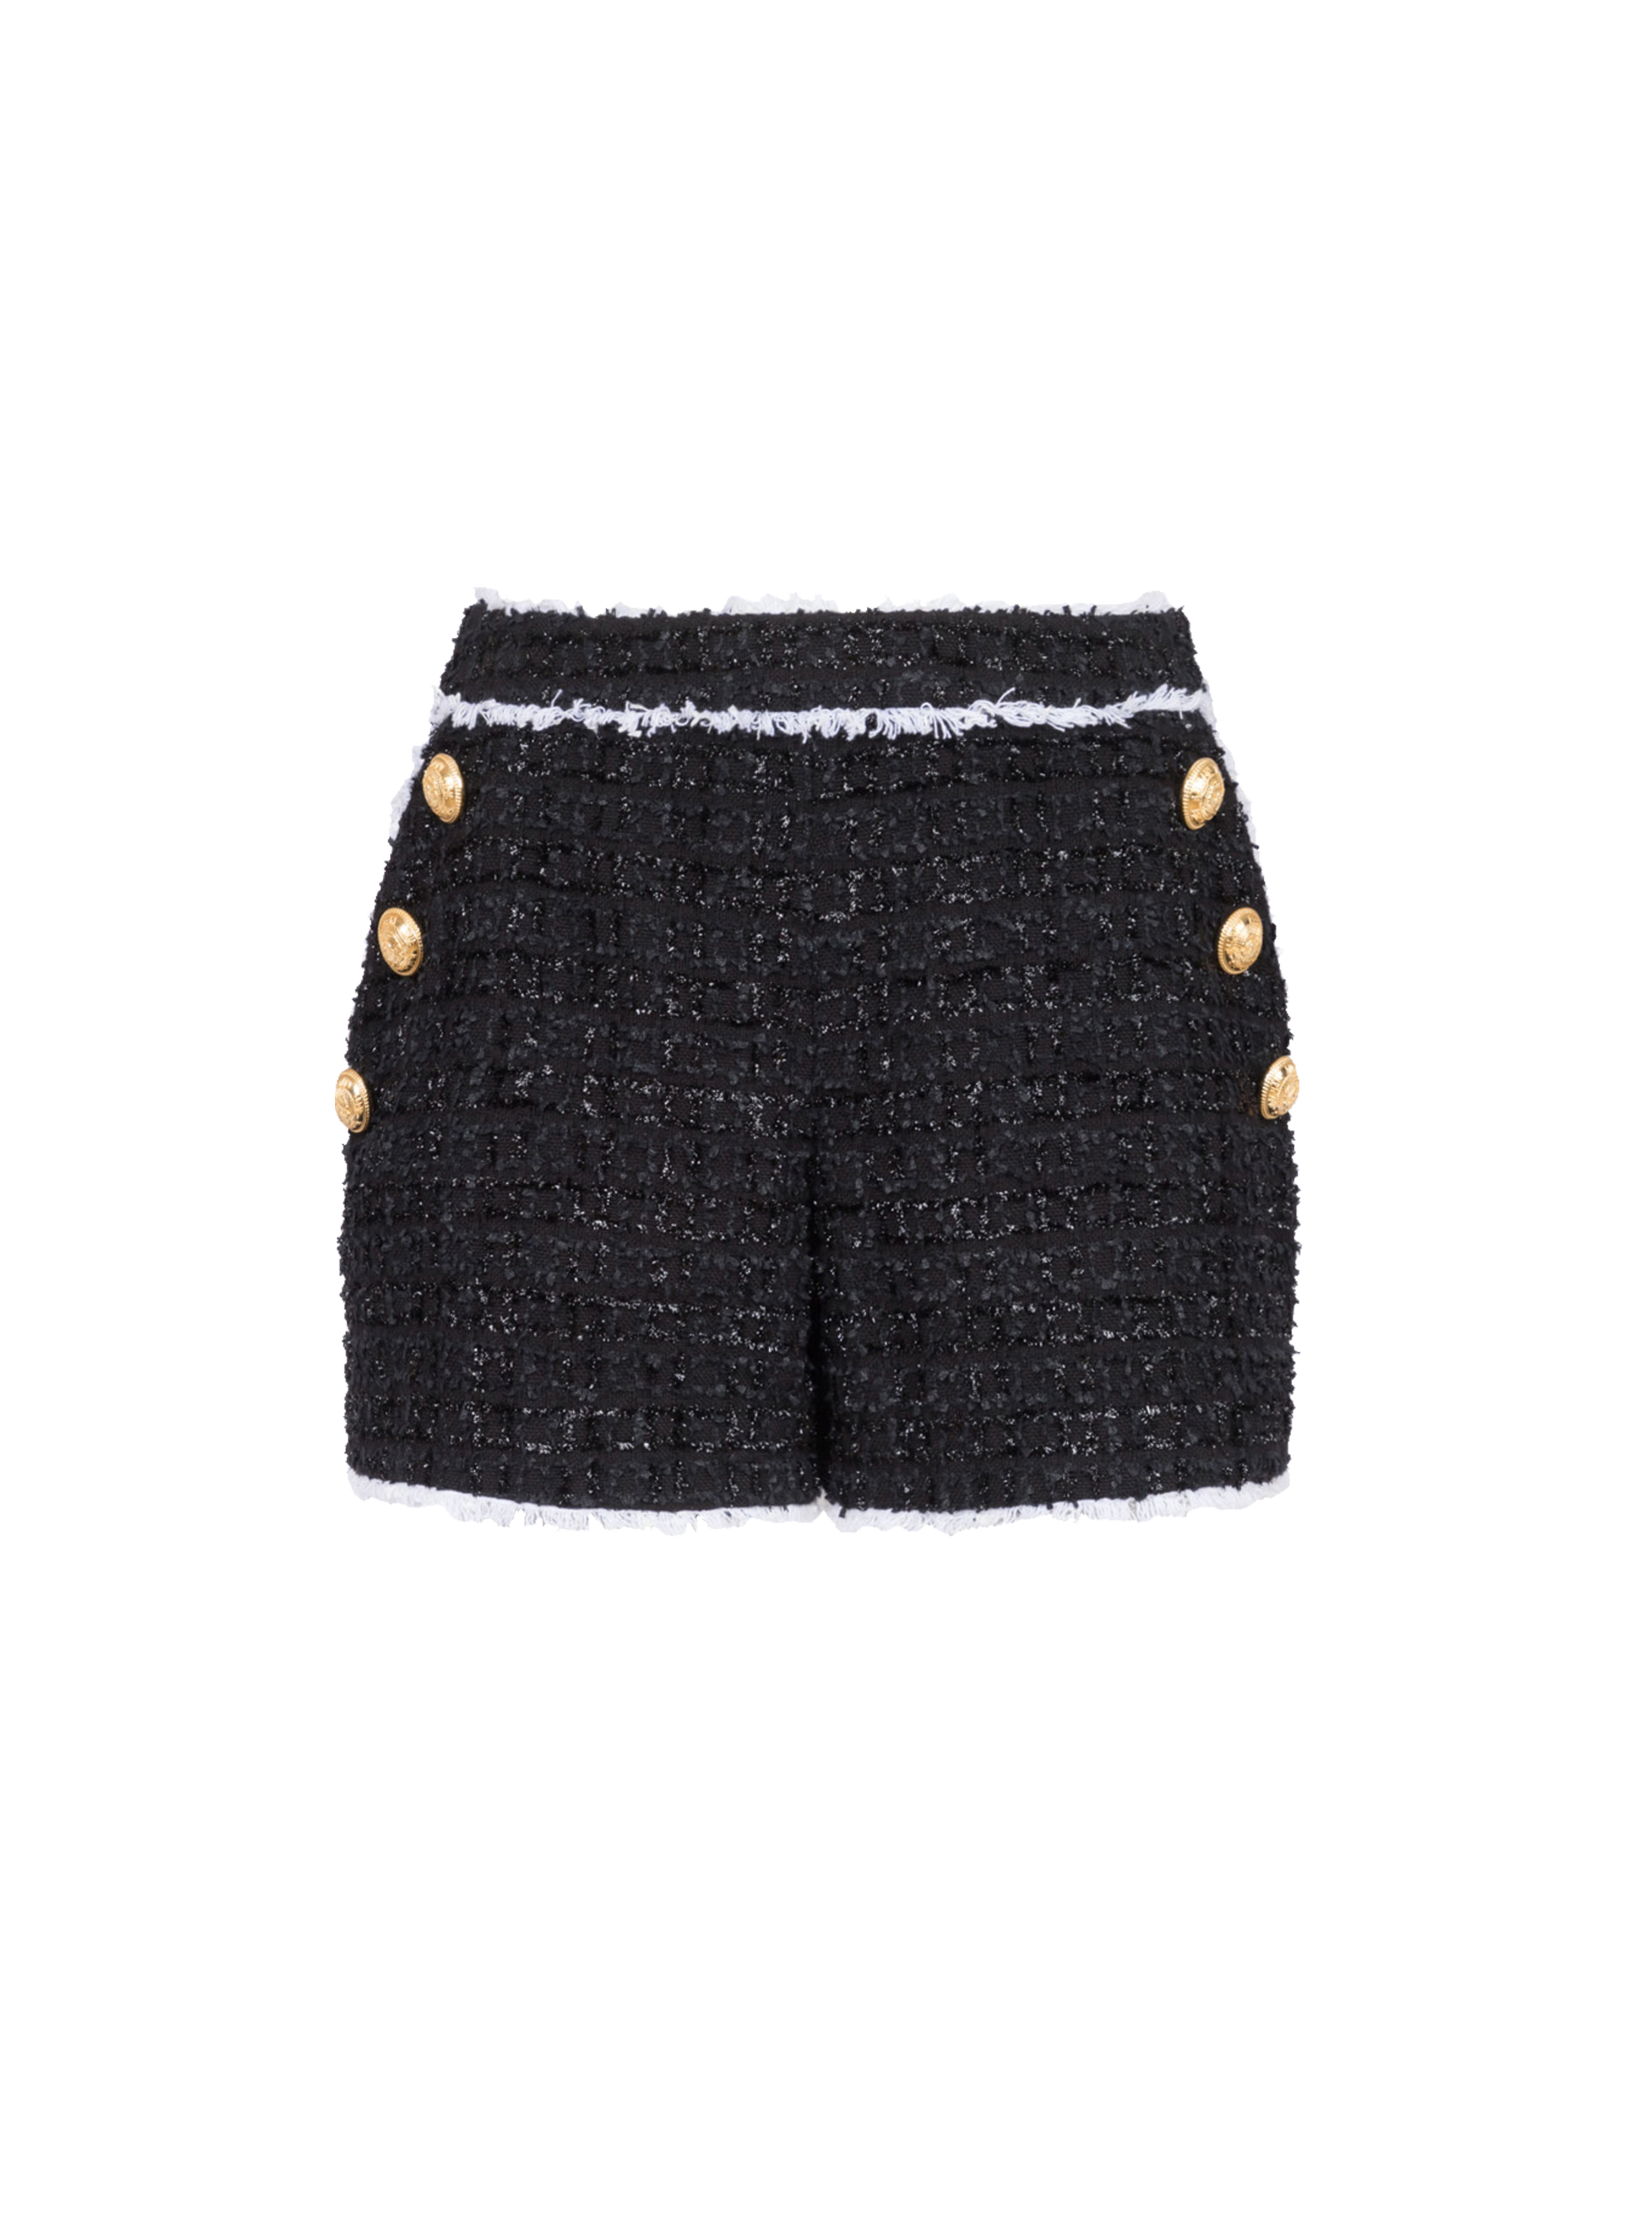 High-waisted tweed shorts, black